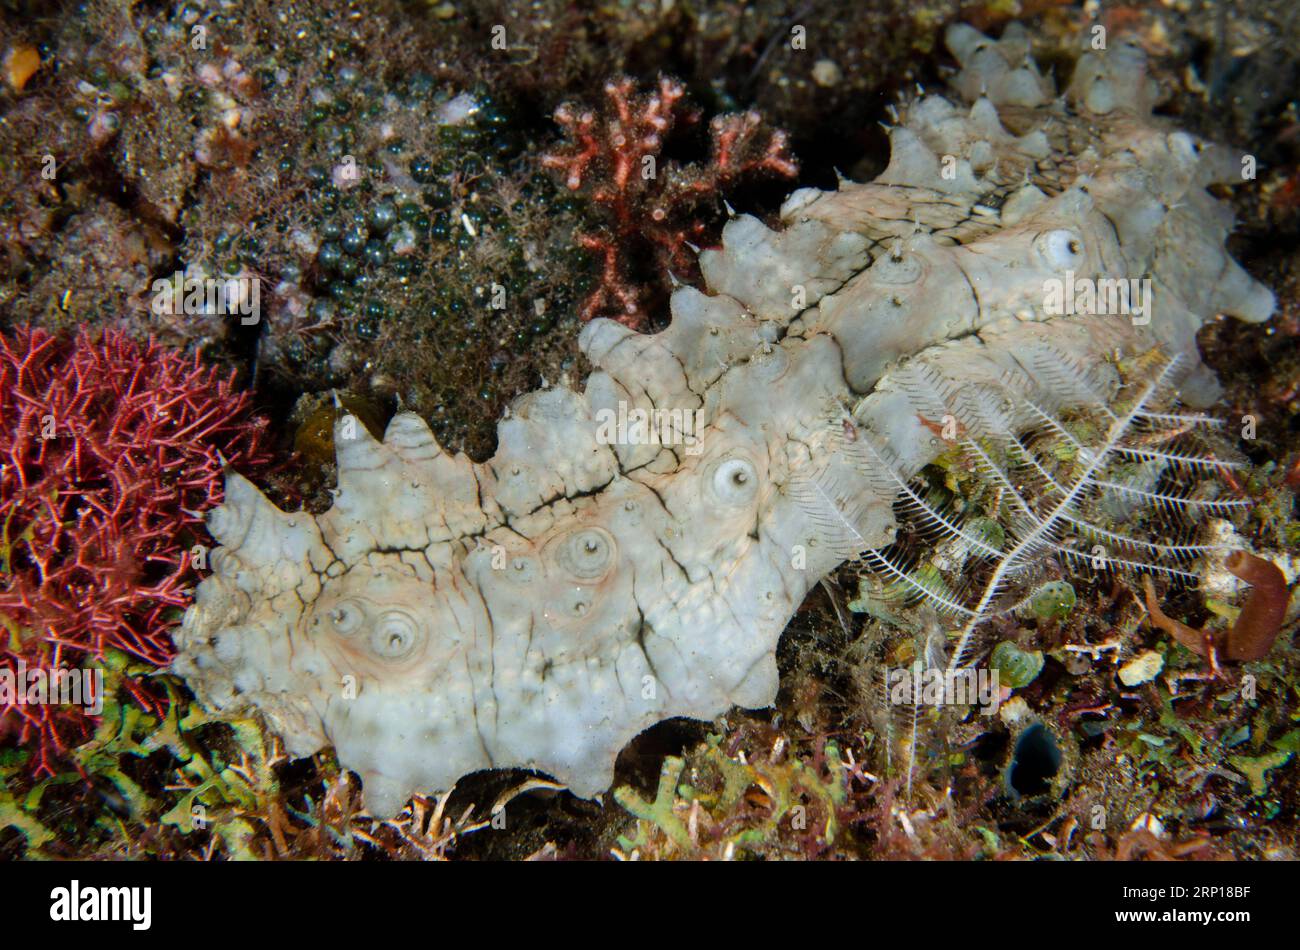 Dragonfish Sea Cucumber, Stichopus horrens, night dive, Pyramids dive site, Amed, Karangasem, Bali, Indonesia Stock Photo